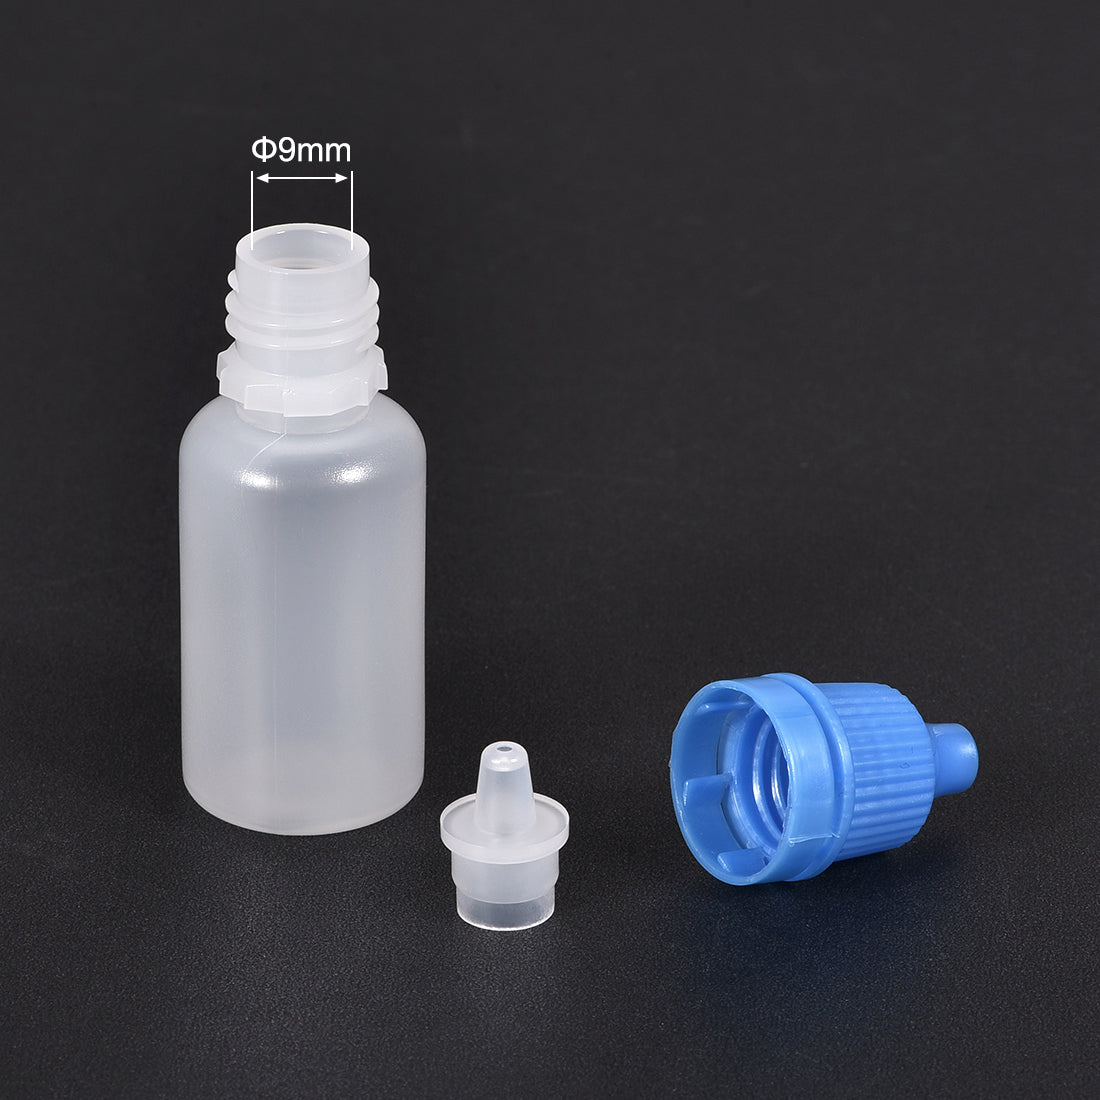 uxcell Uxcell 10ml/0.34 oz Empty Squeezable Dropper Bottle Blue 10pcs